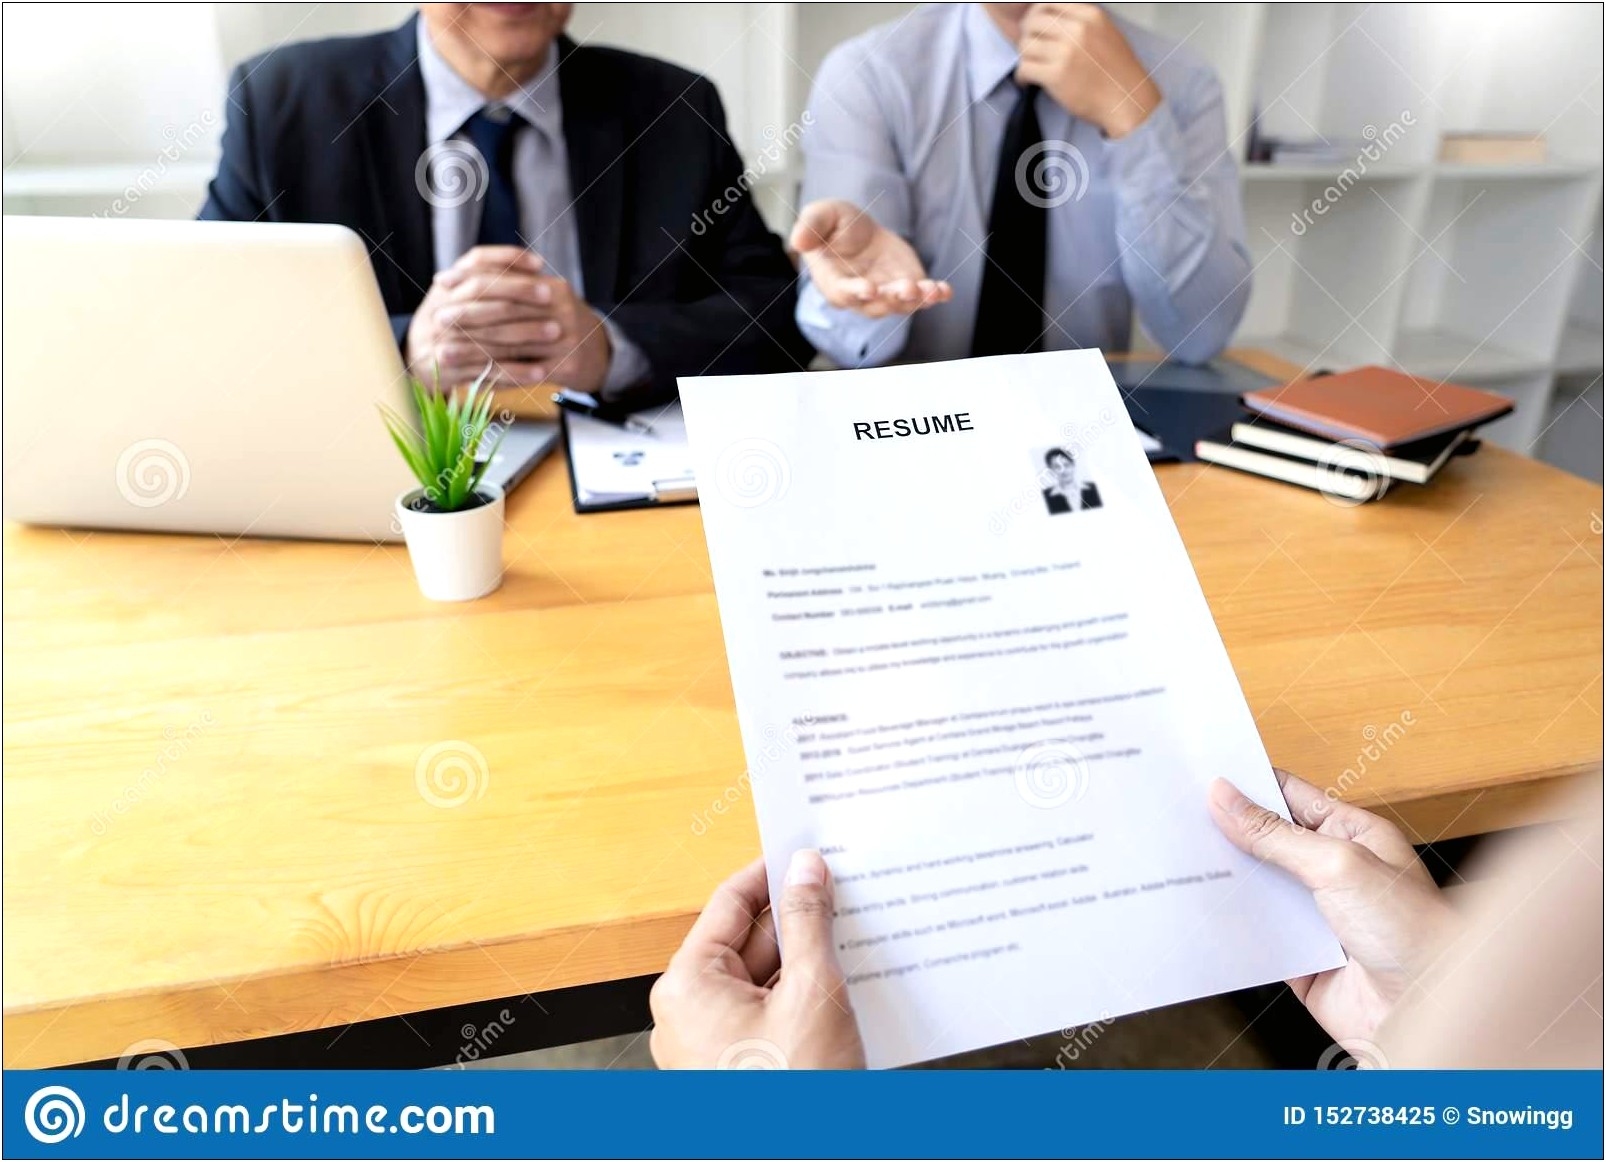 Resume Professional Summary Business Management